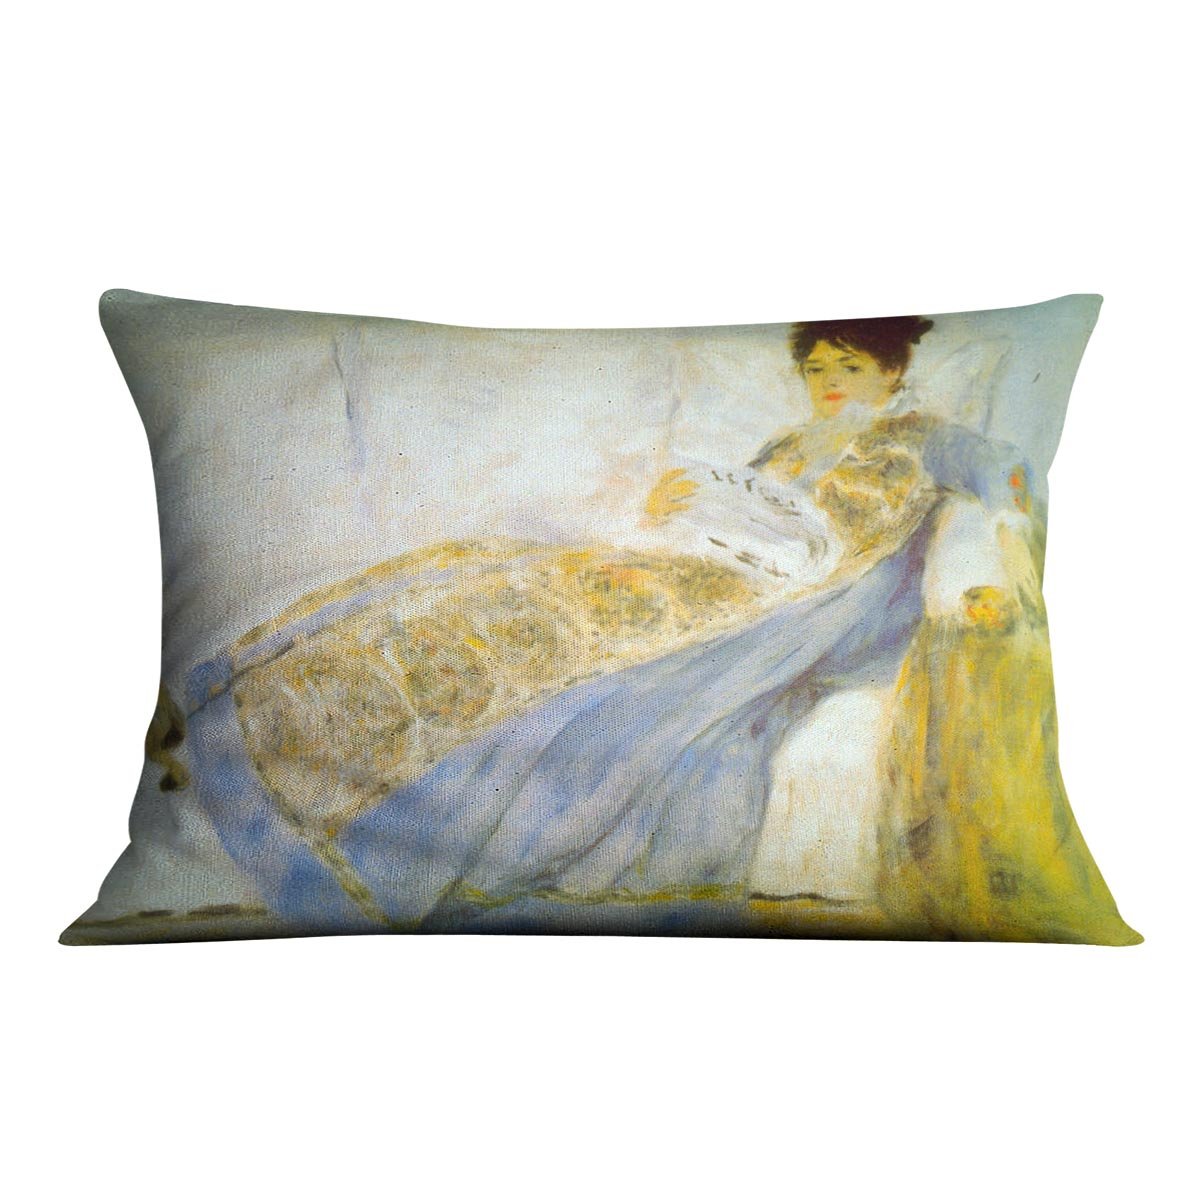 Le Figaro by Renoir Throw Pillow